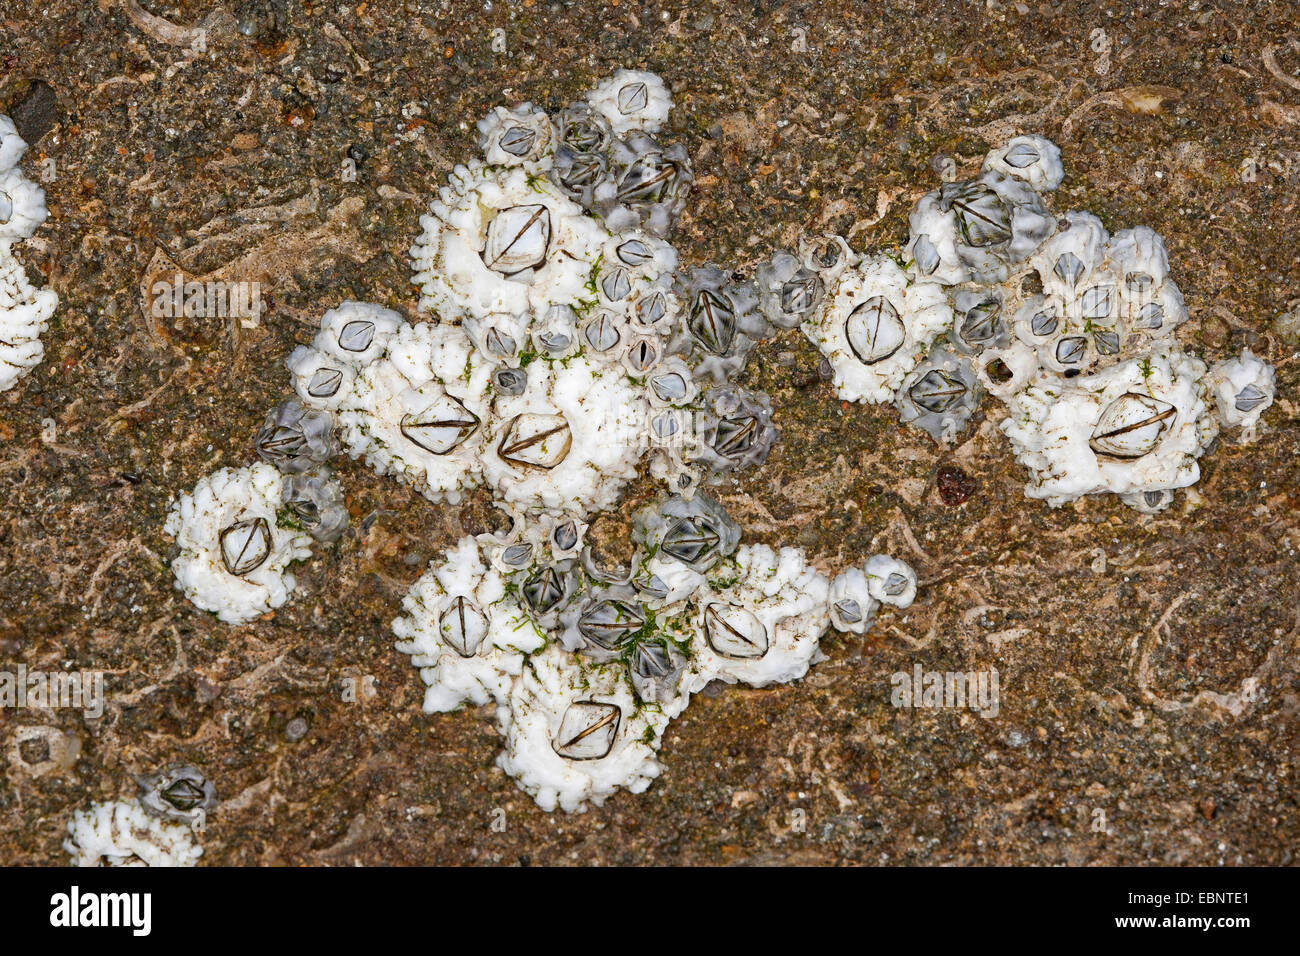 Northern rock barnacle, Acorn barnacle, Common rock barnacle (Semibalanus balanoides, Balanus balanoides), on a rock at the seashore, Germany Stock Photo